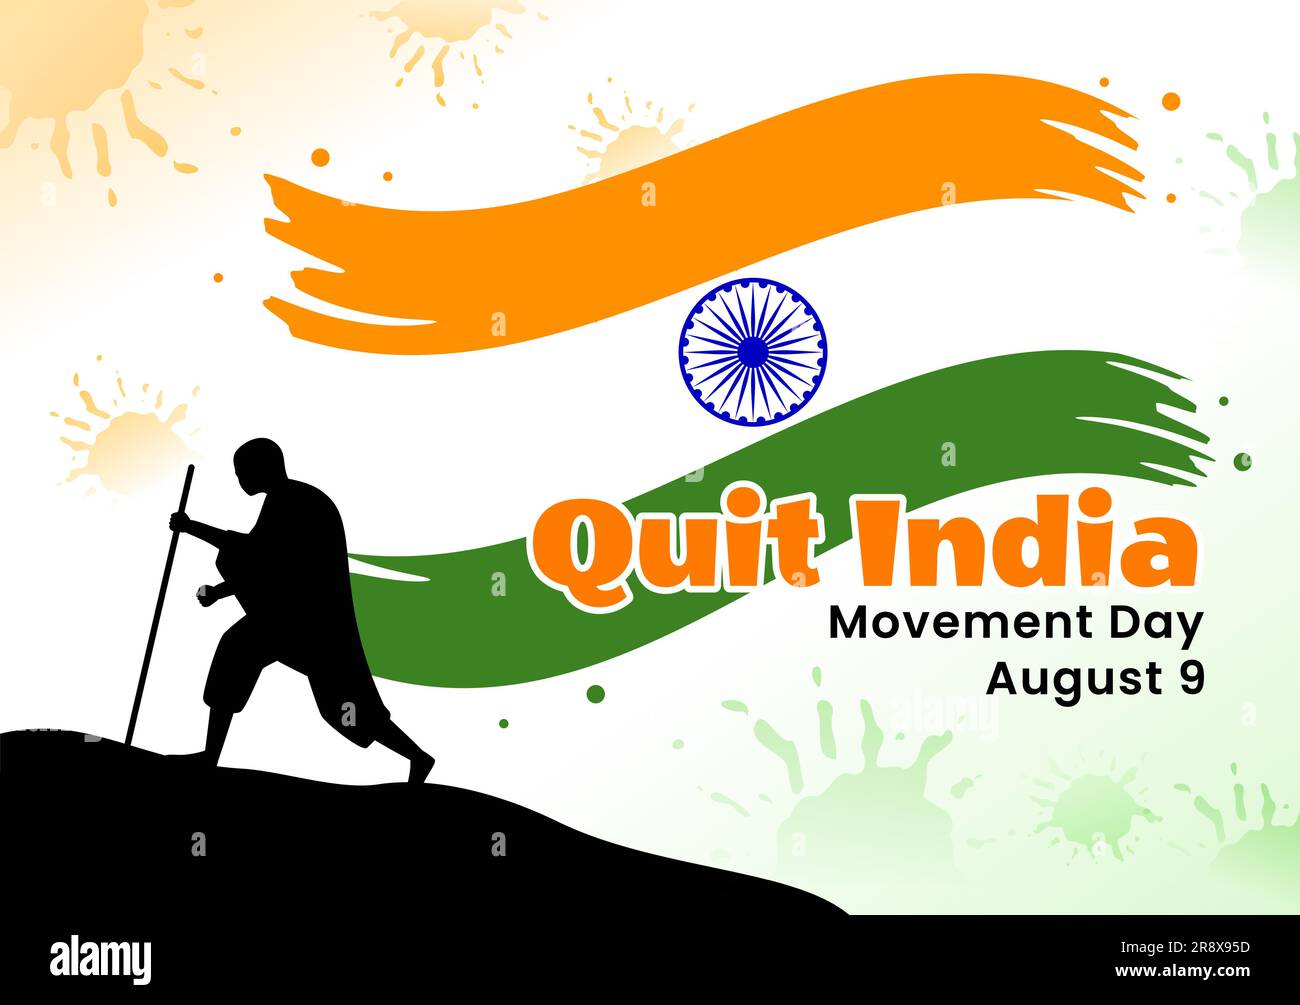 94 Quit India Movement Images Stock Photos  Vectors  Shutterstock